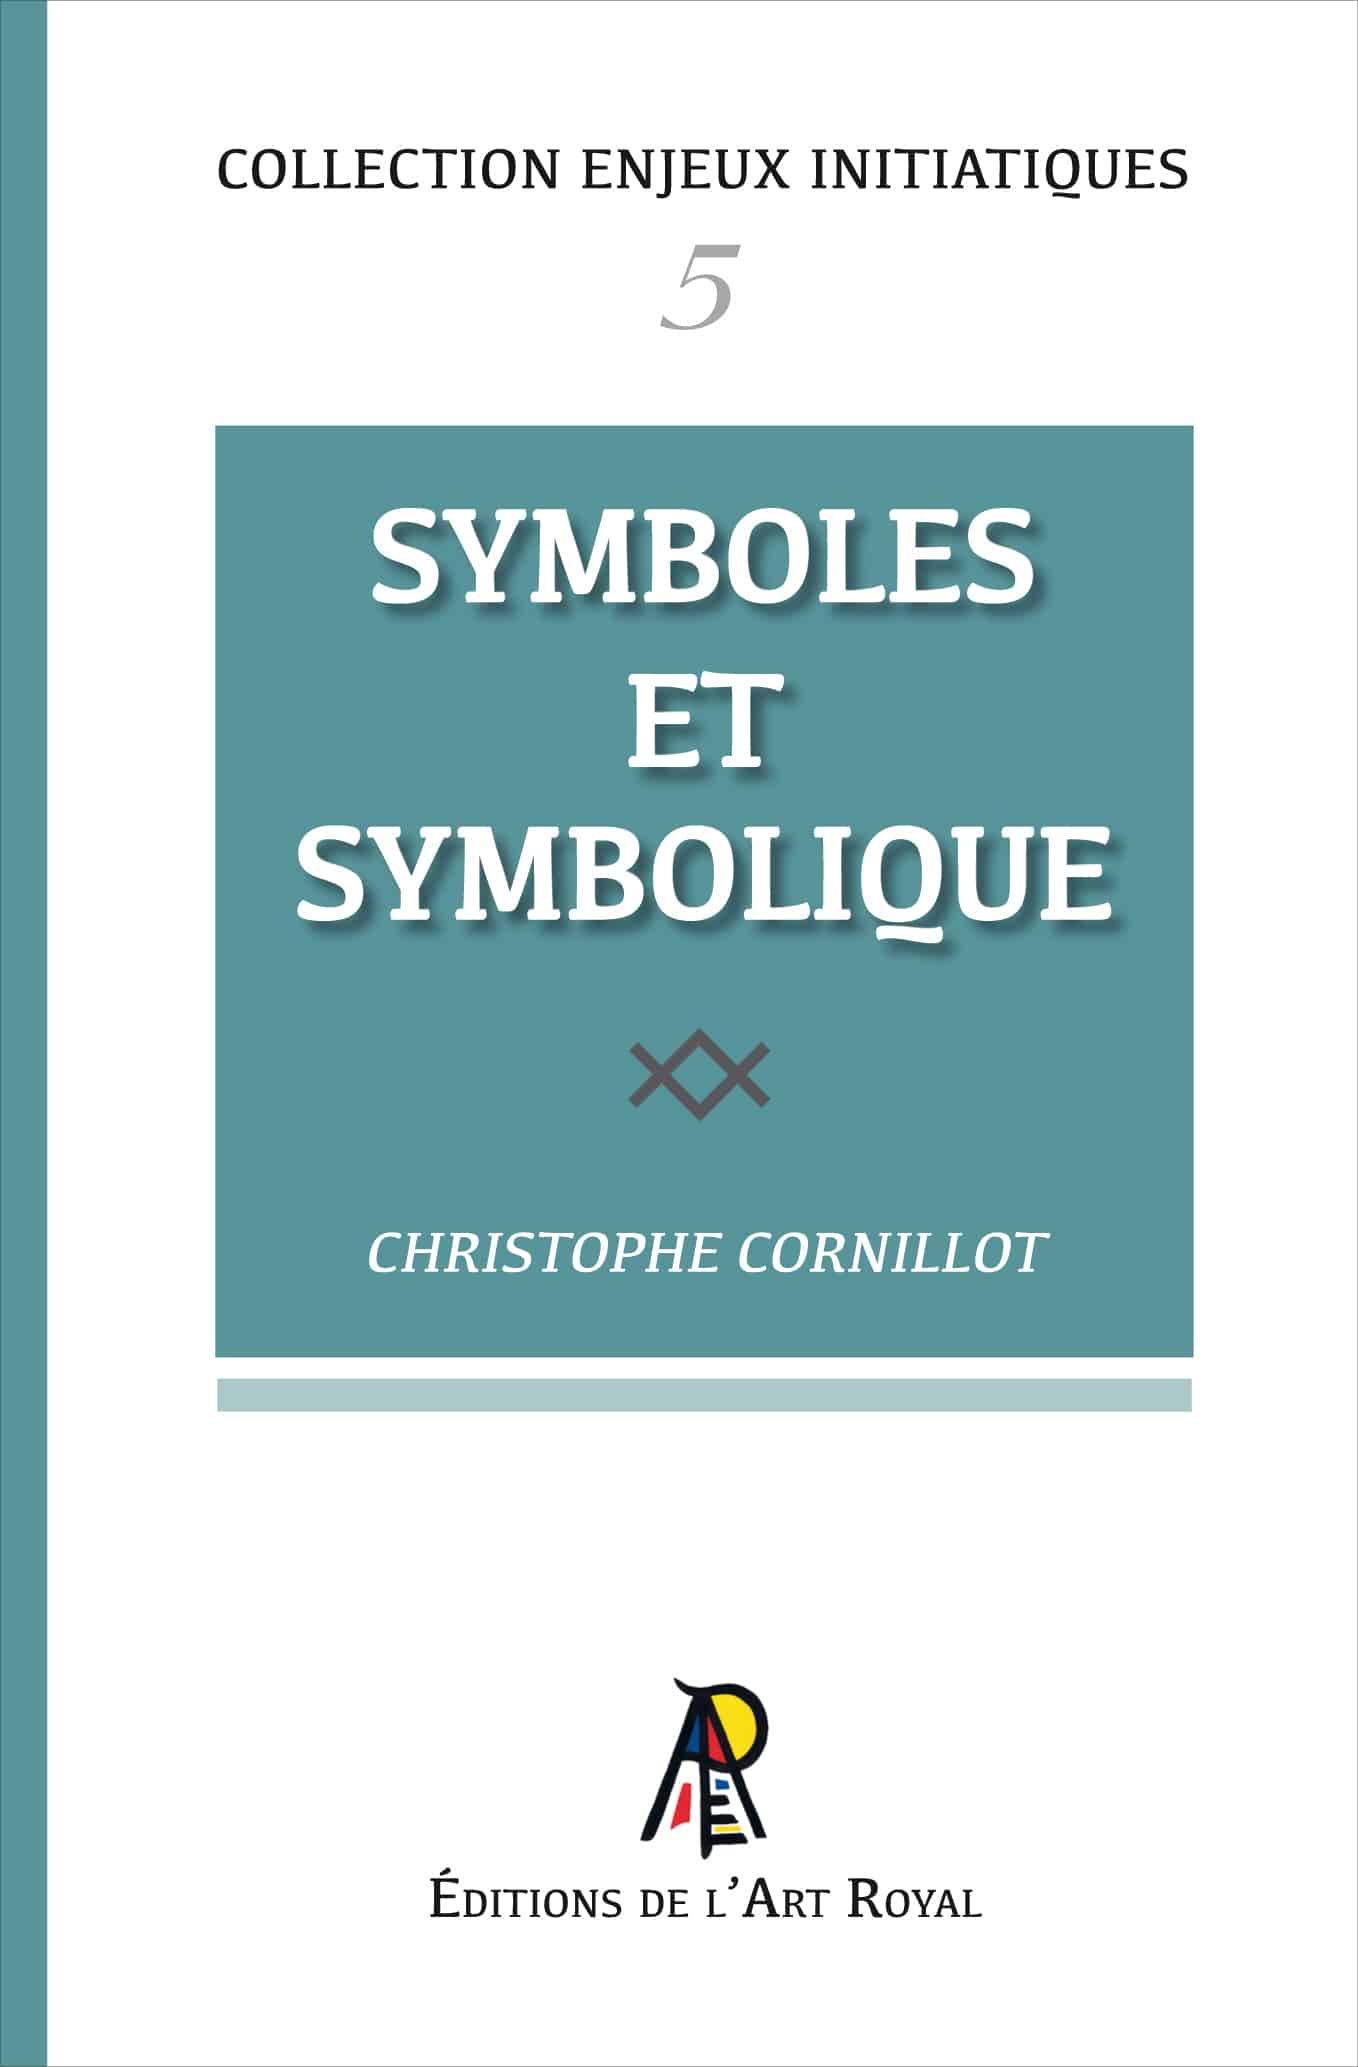 Symboles et Symbolique, Christophe Cornillot